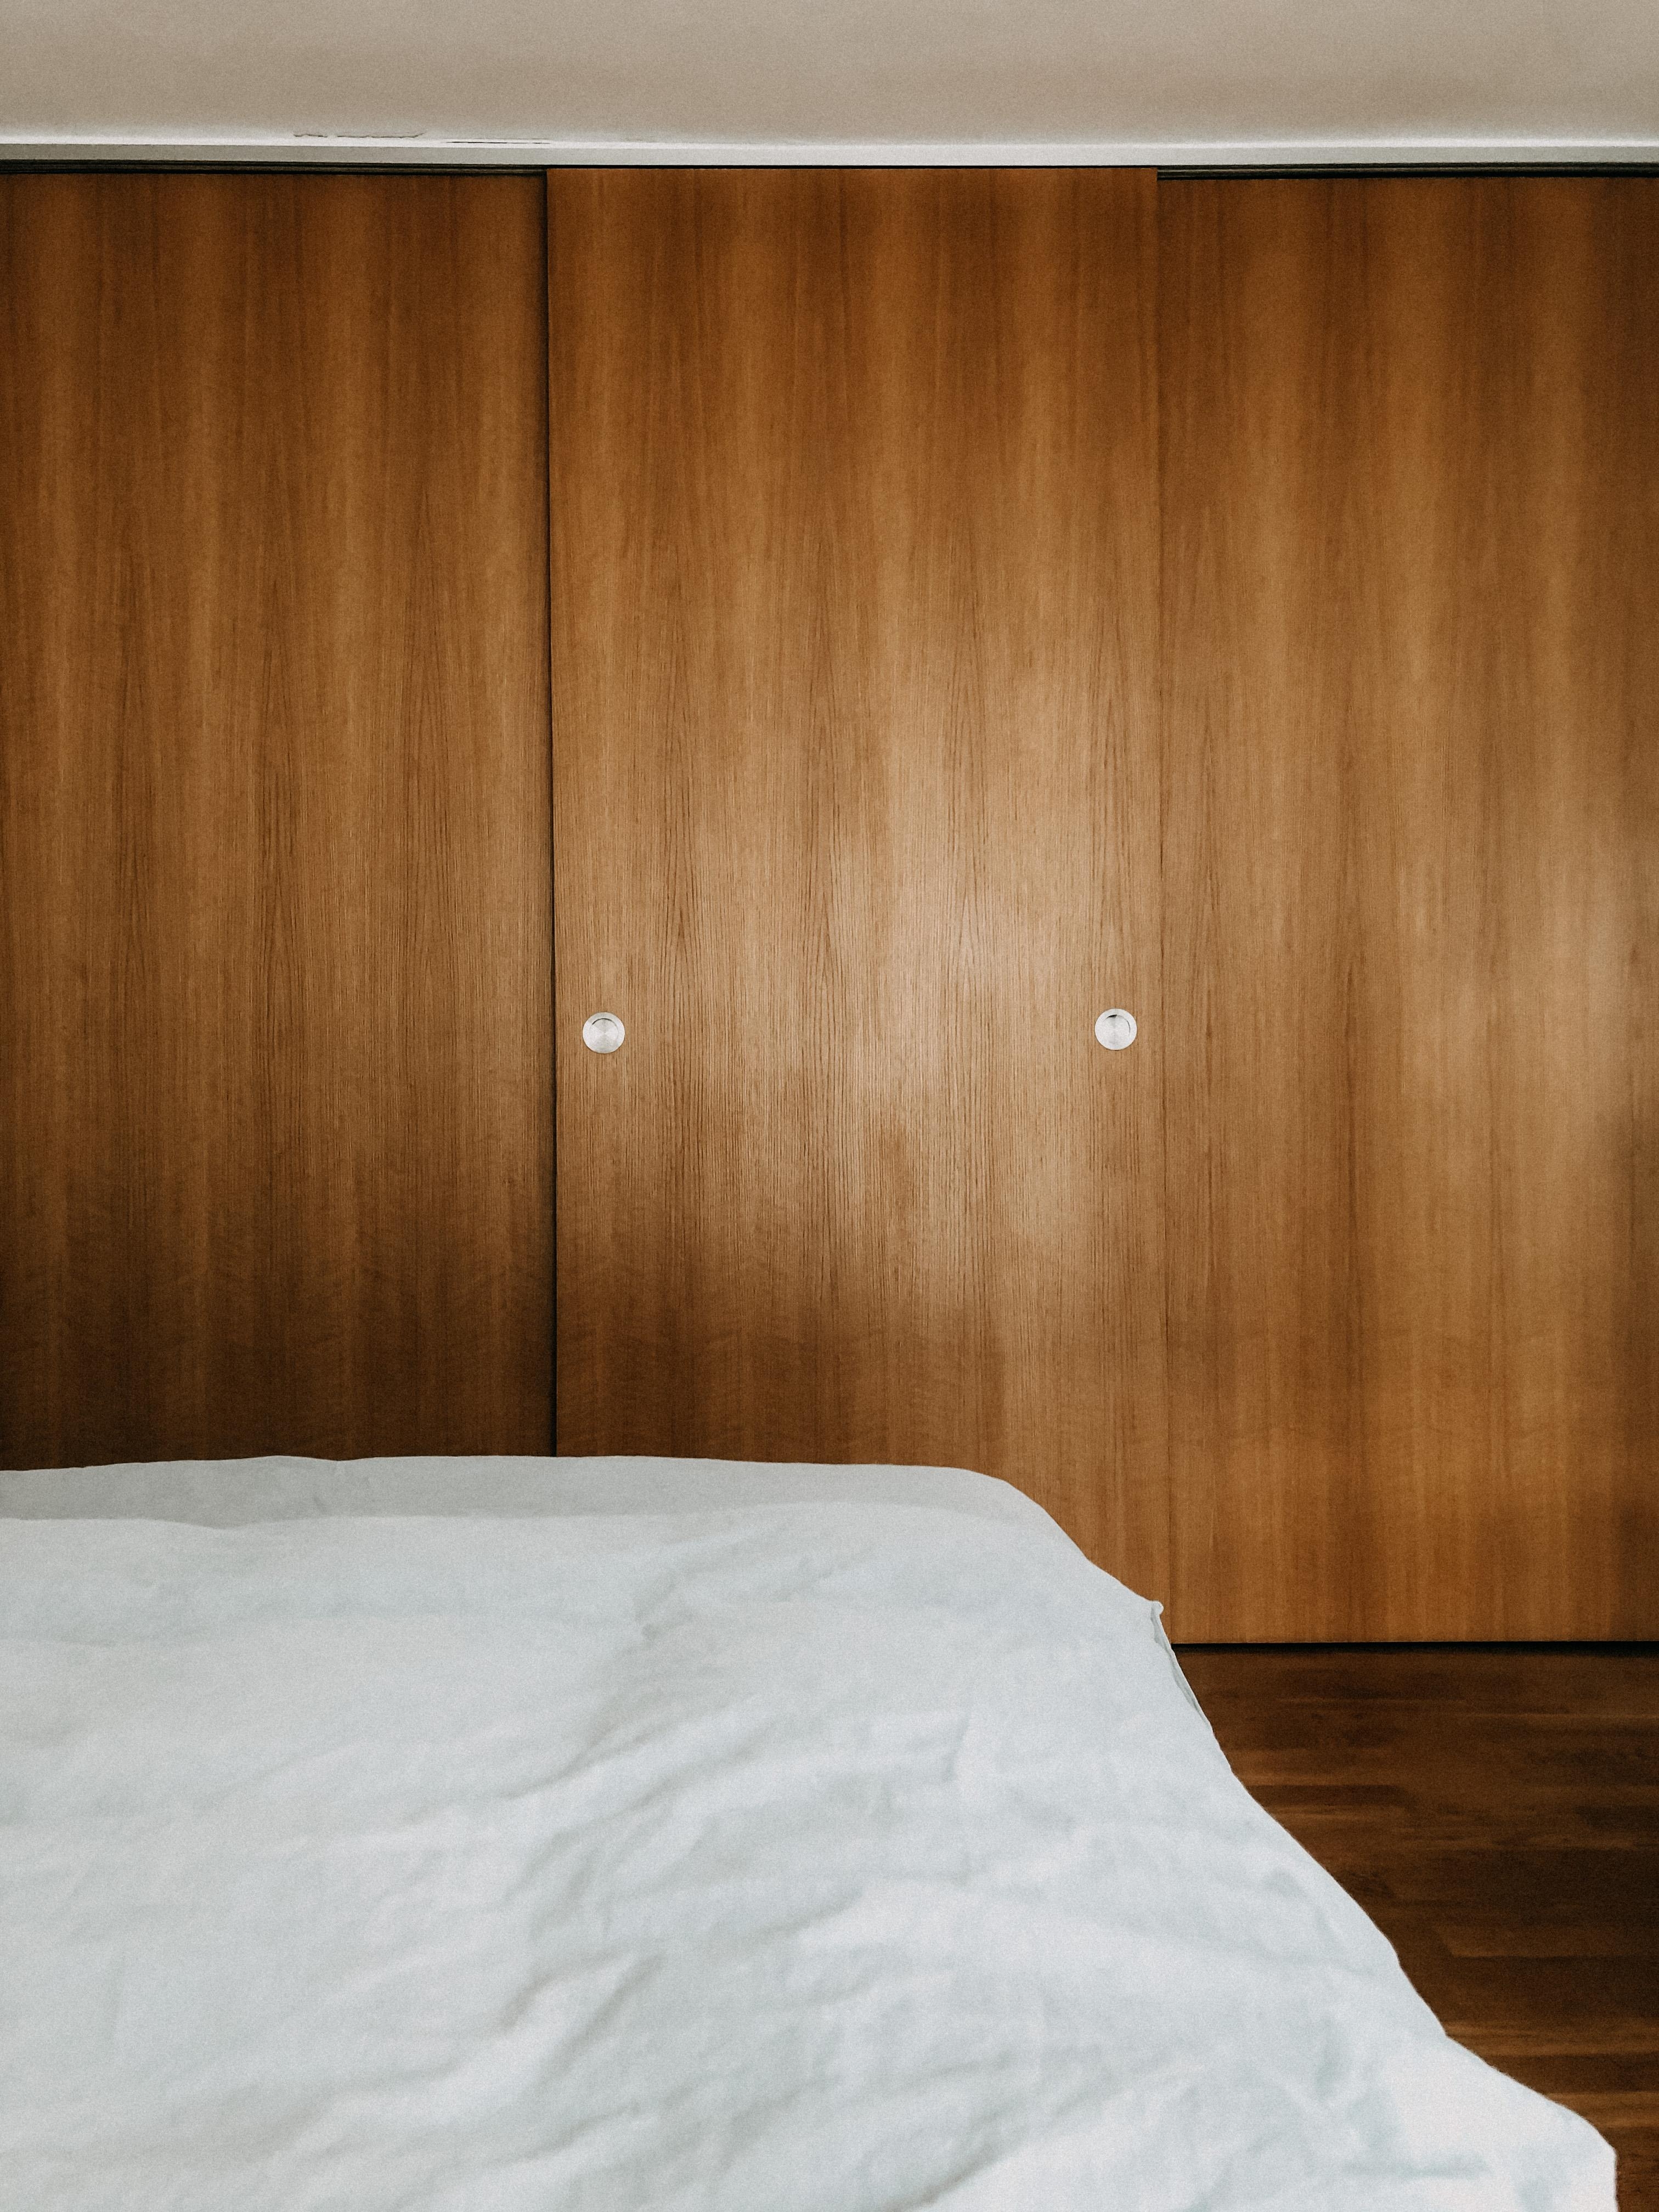 #bedroom #schlafzimmer
#einbauschrank #closet #oakwood #eichenholz #schiebetüren #cozybedroom #cozybed 